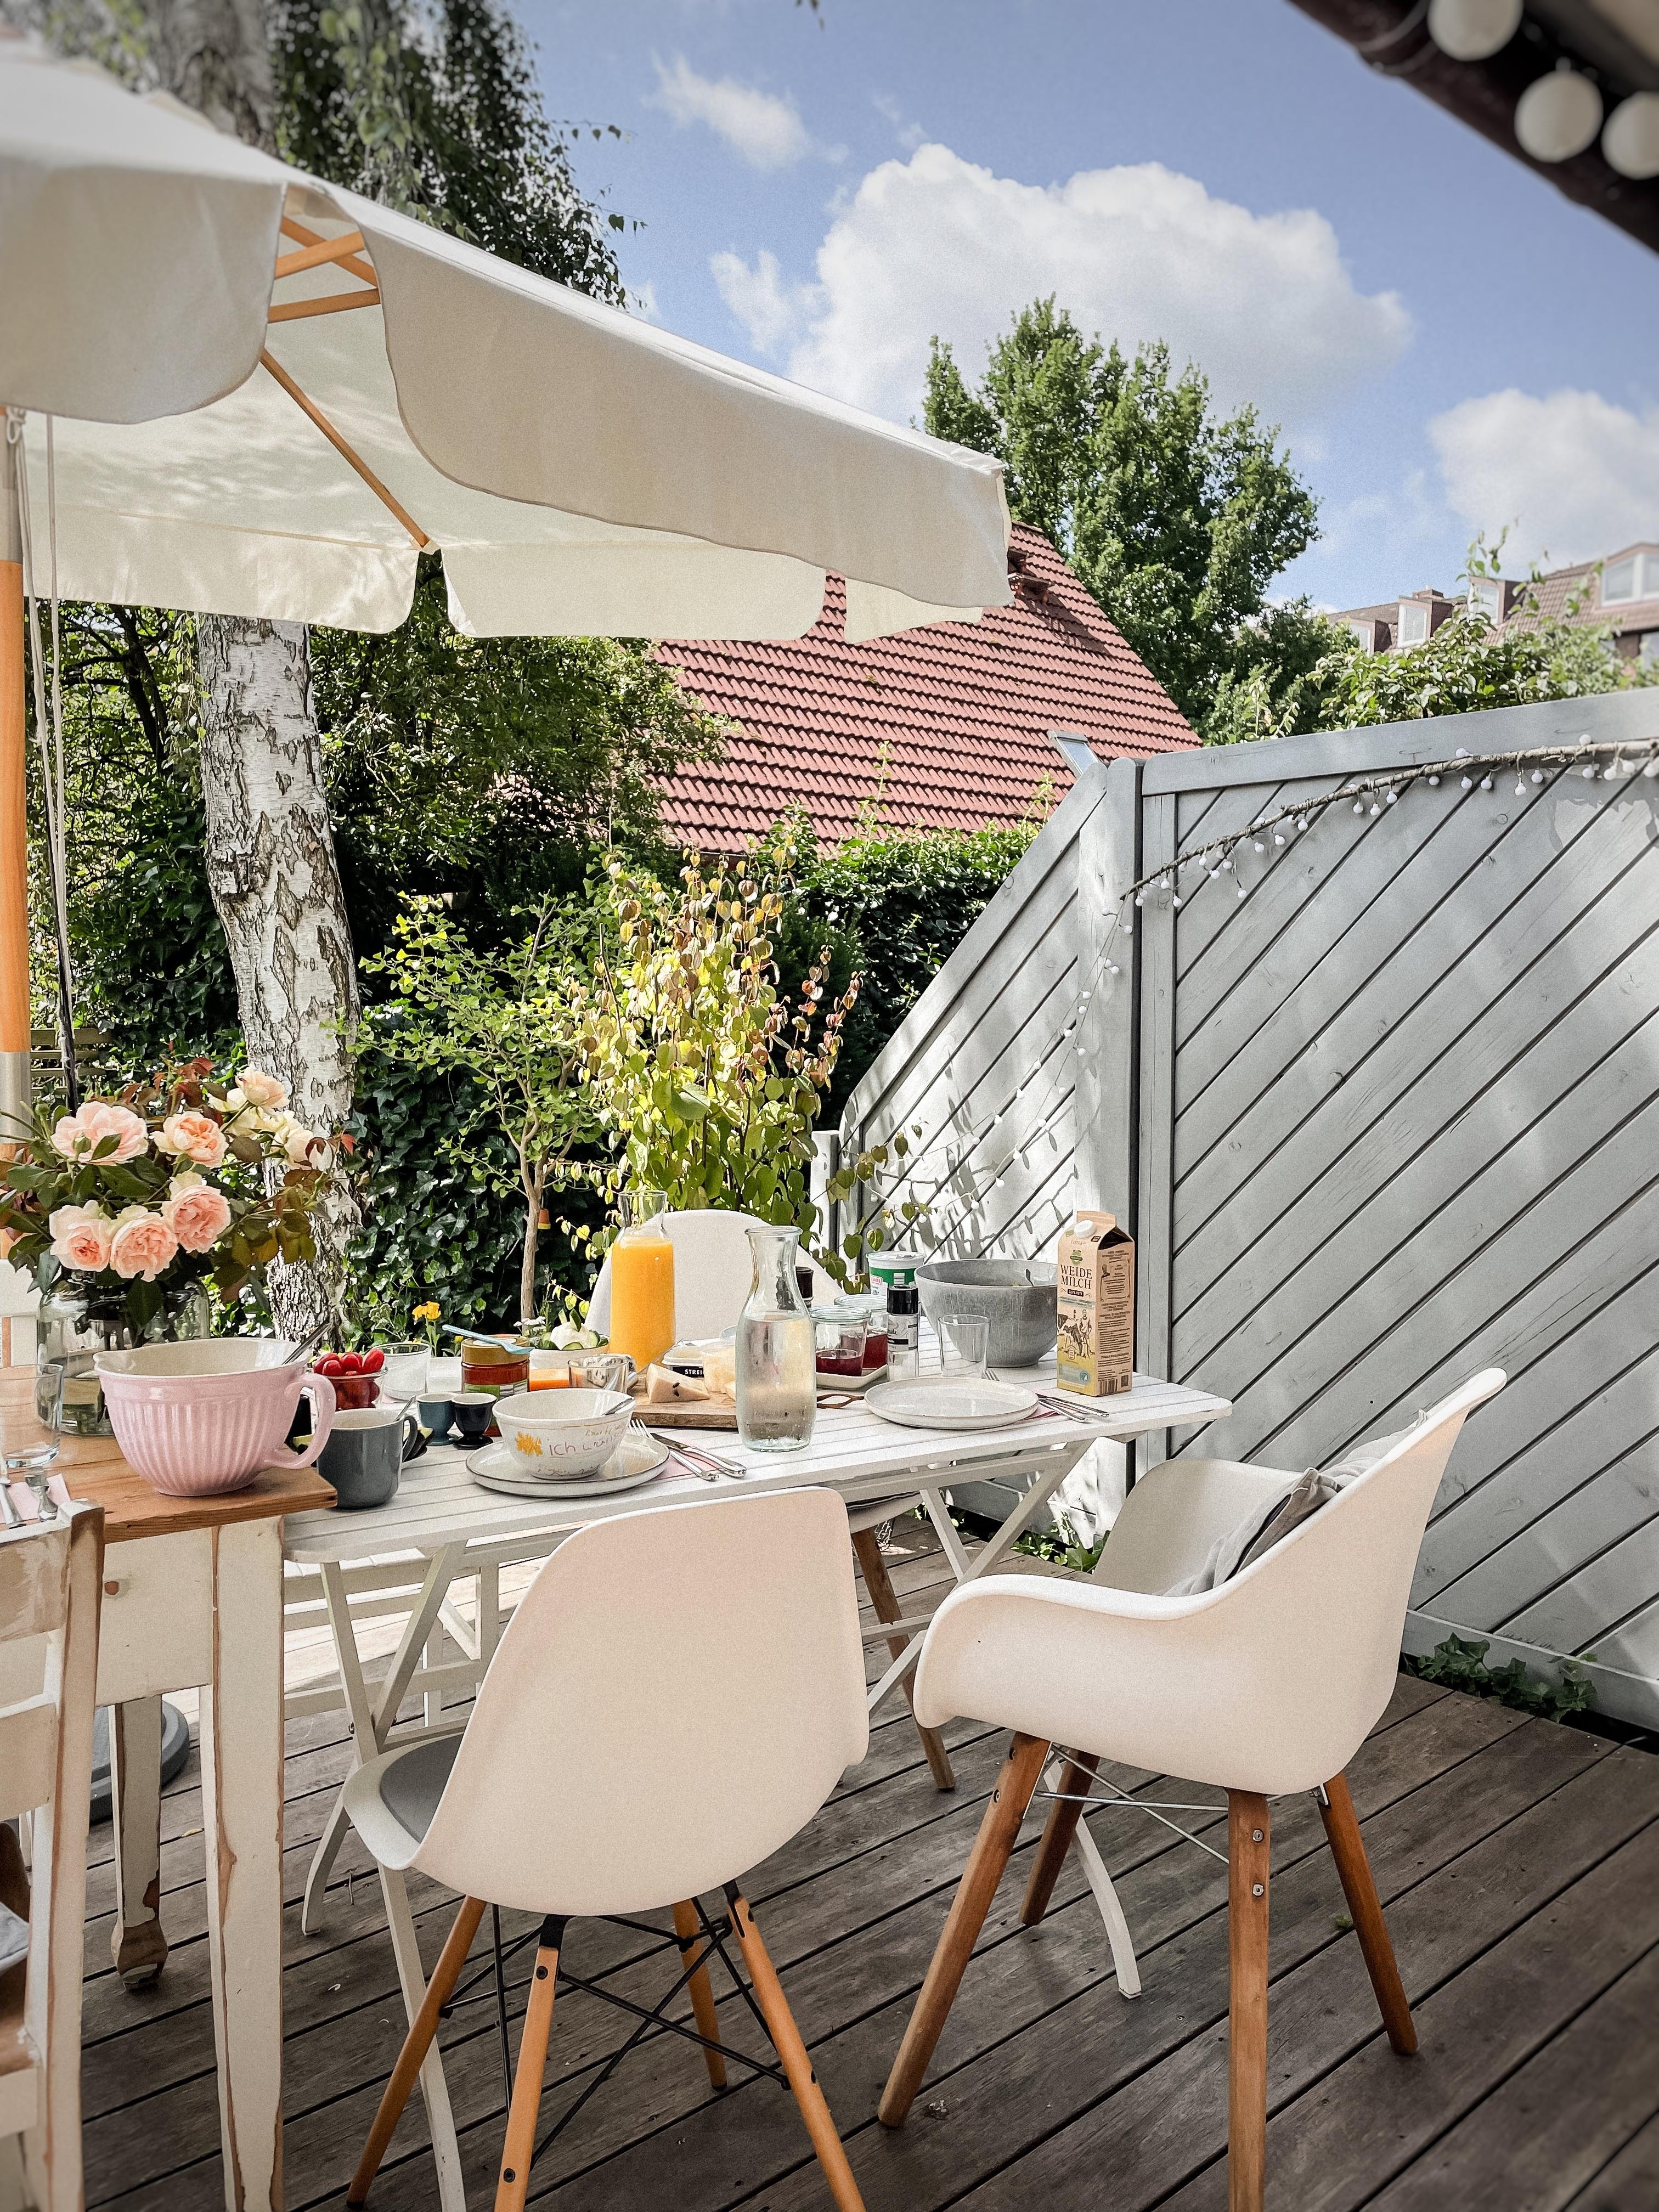 Lieblingssonntag #gartenzeit #terrasse #familyfirst #vitra #stuhlmix #nordicliving #amliebstendraussen